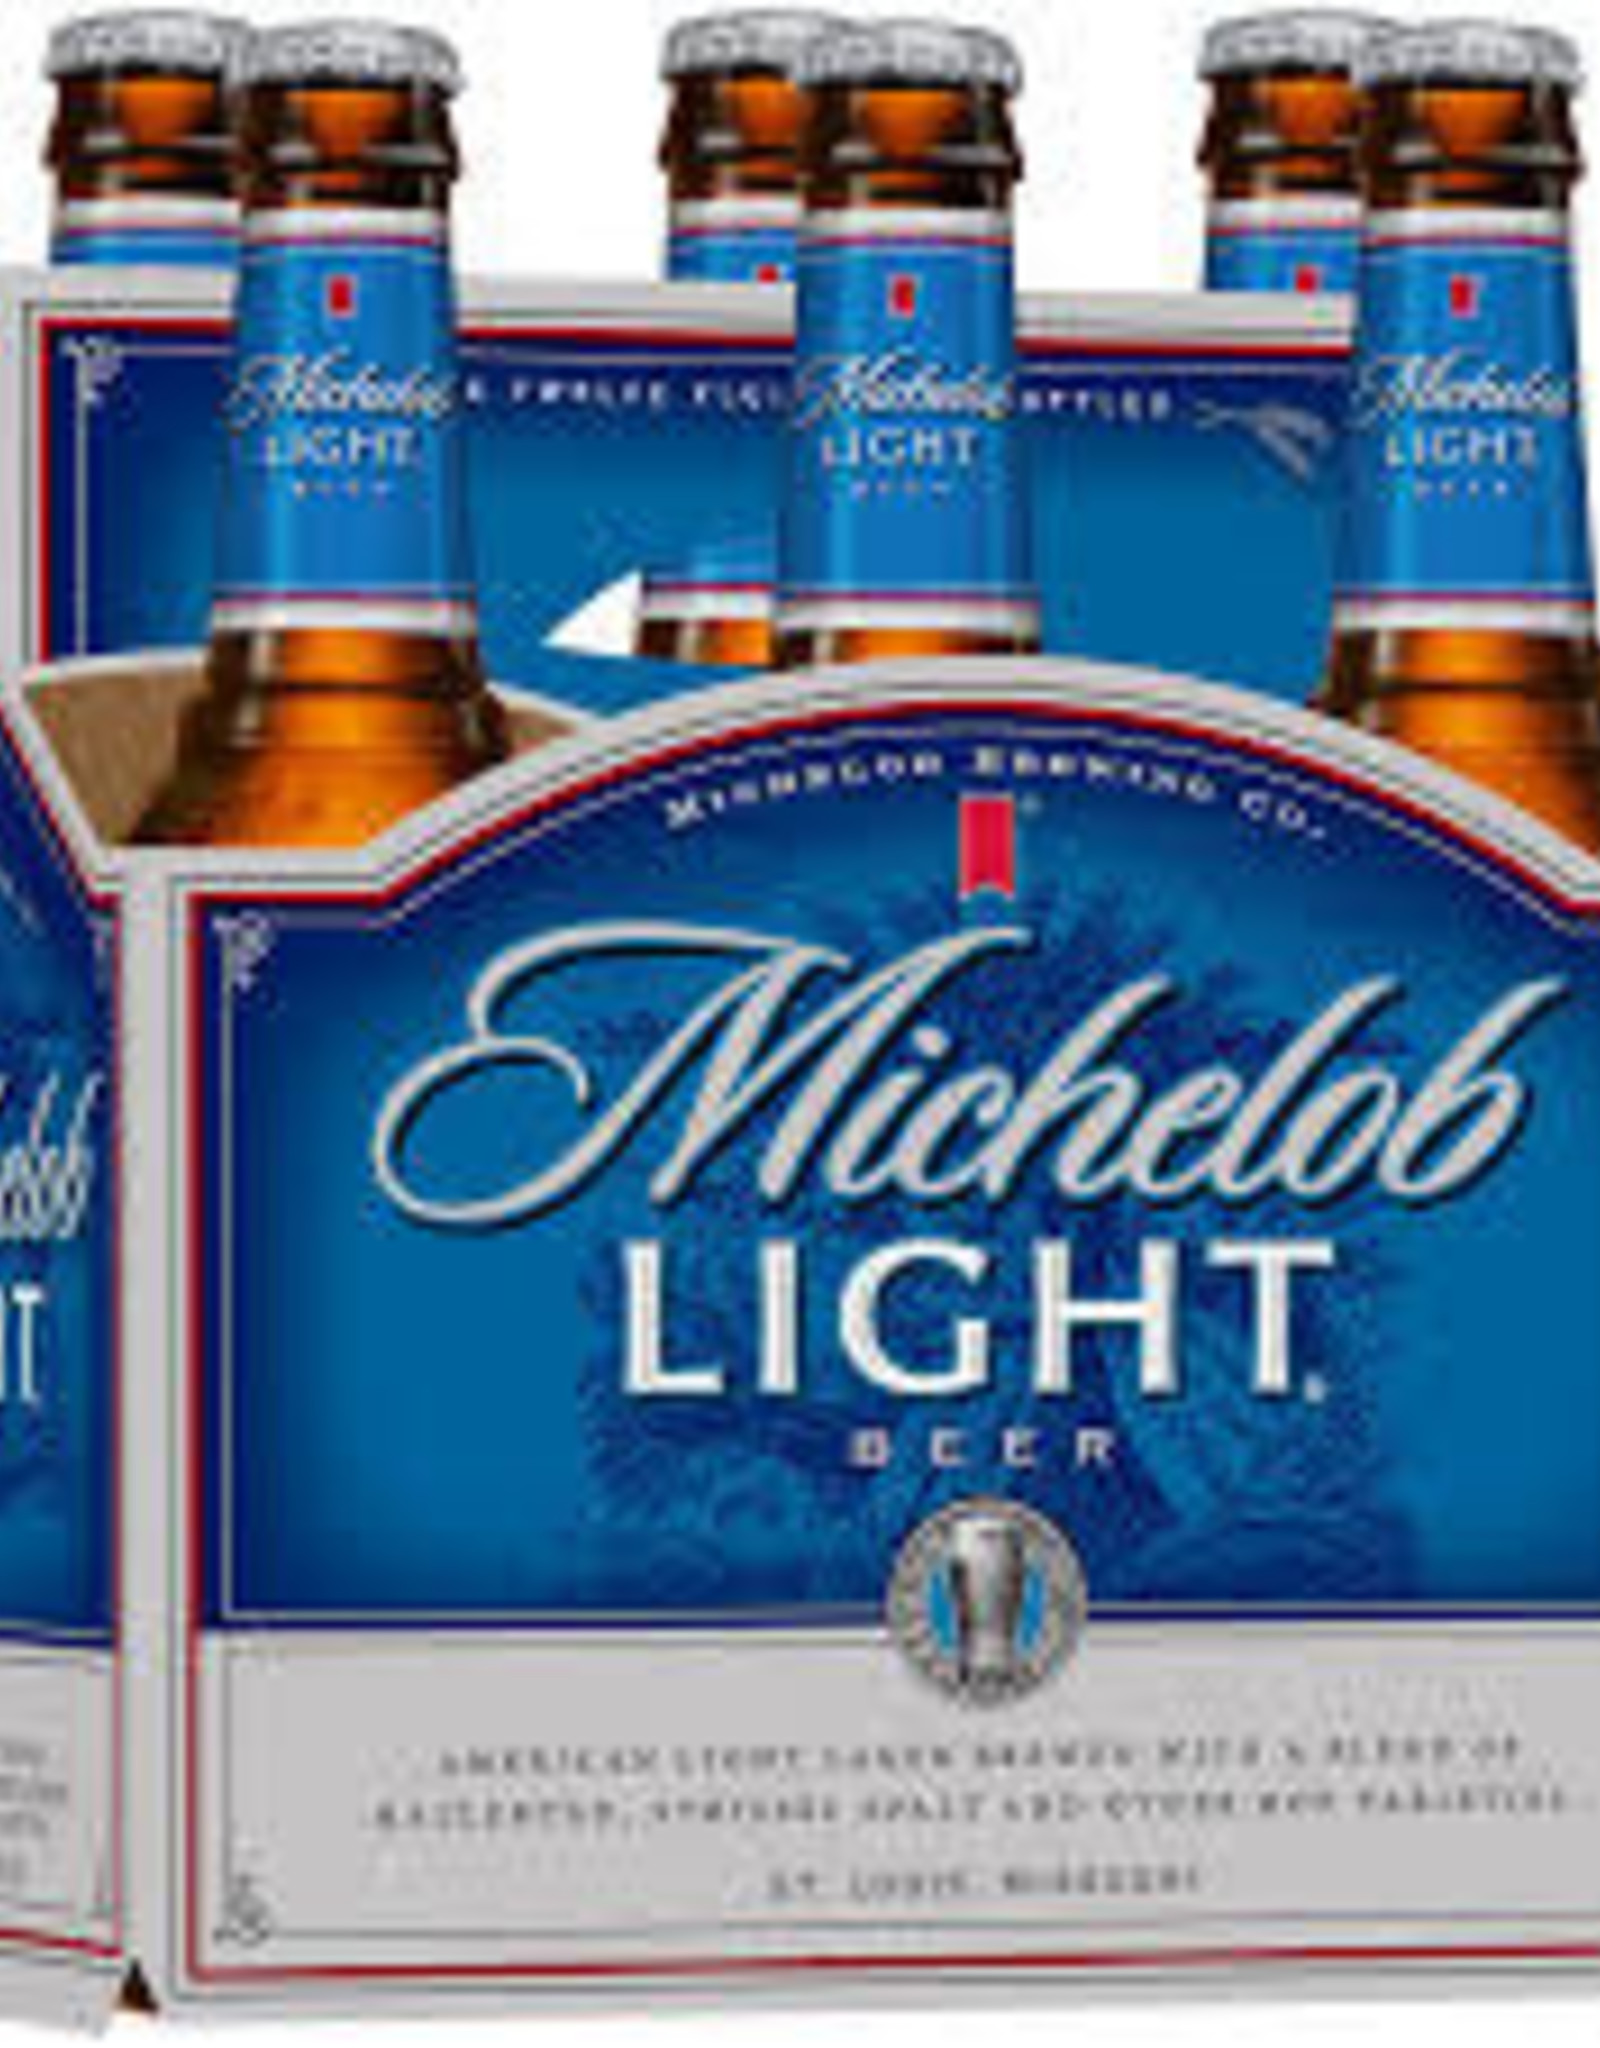 Michelob Michelob Light Bottle